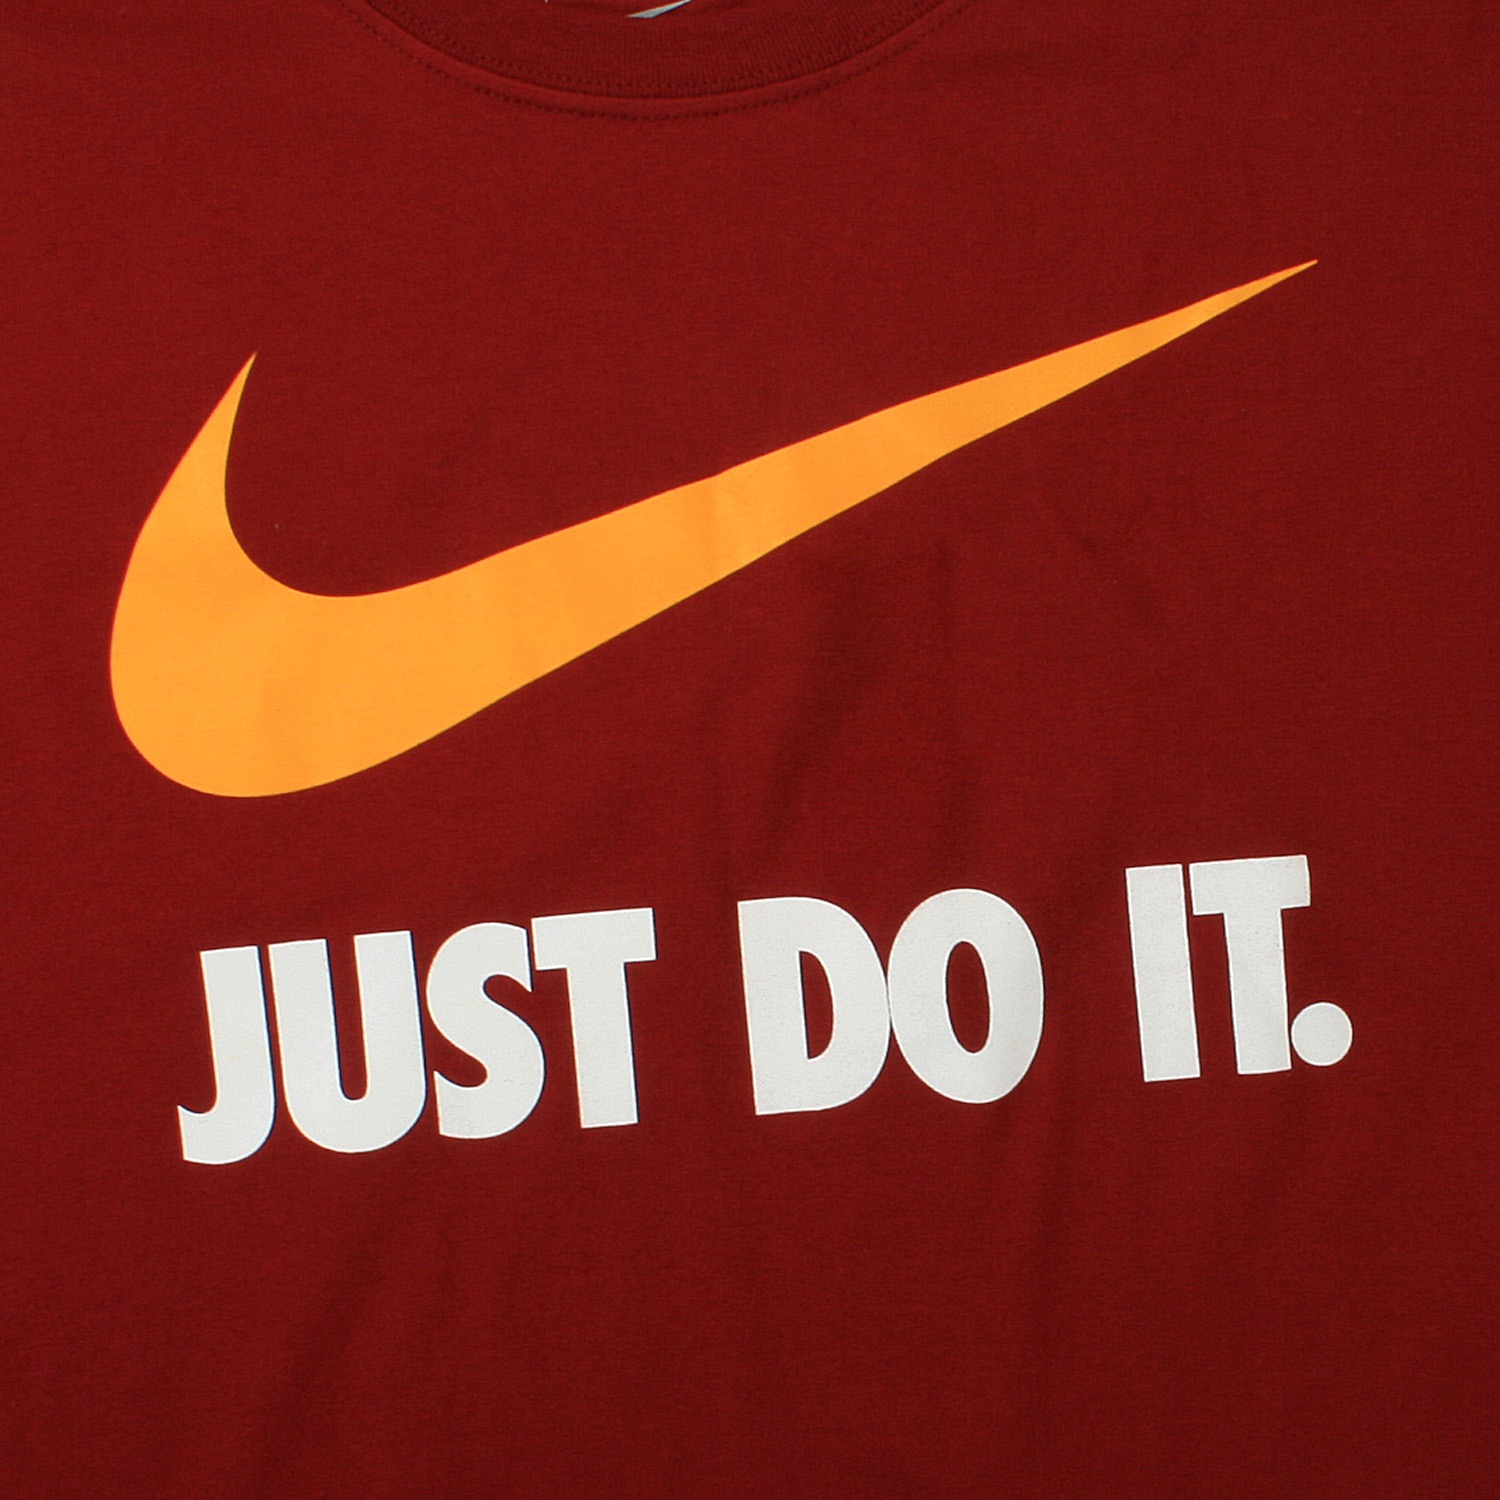 Найк just do it. Слоган найк. Nike лозунг. Nike слоган компании. Слоган Nike just do it.